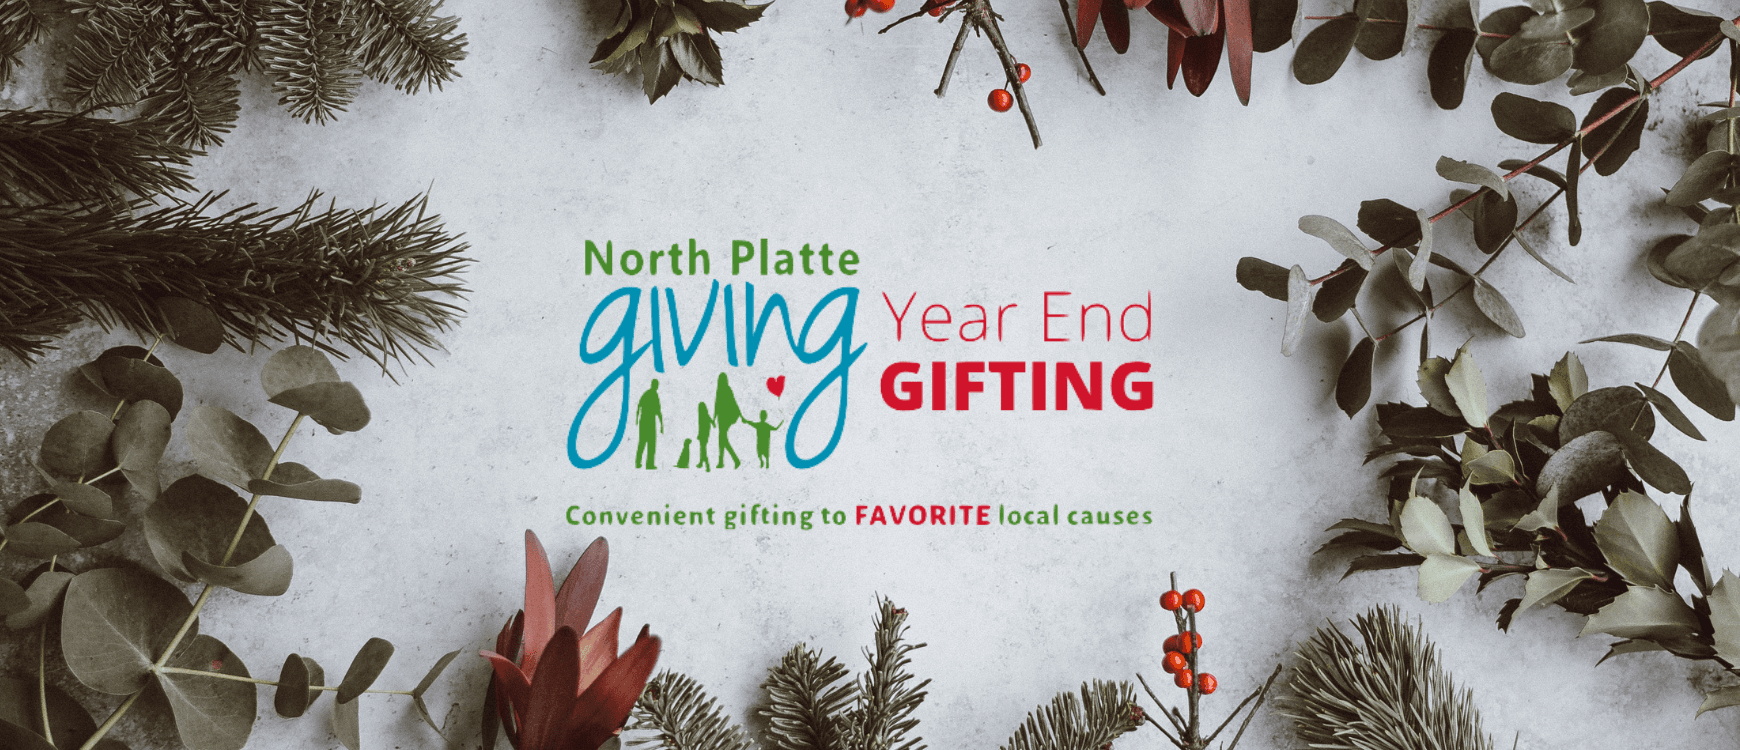 North Platte Gifting